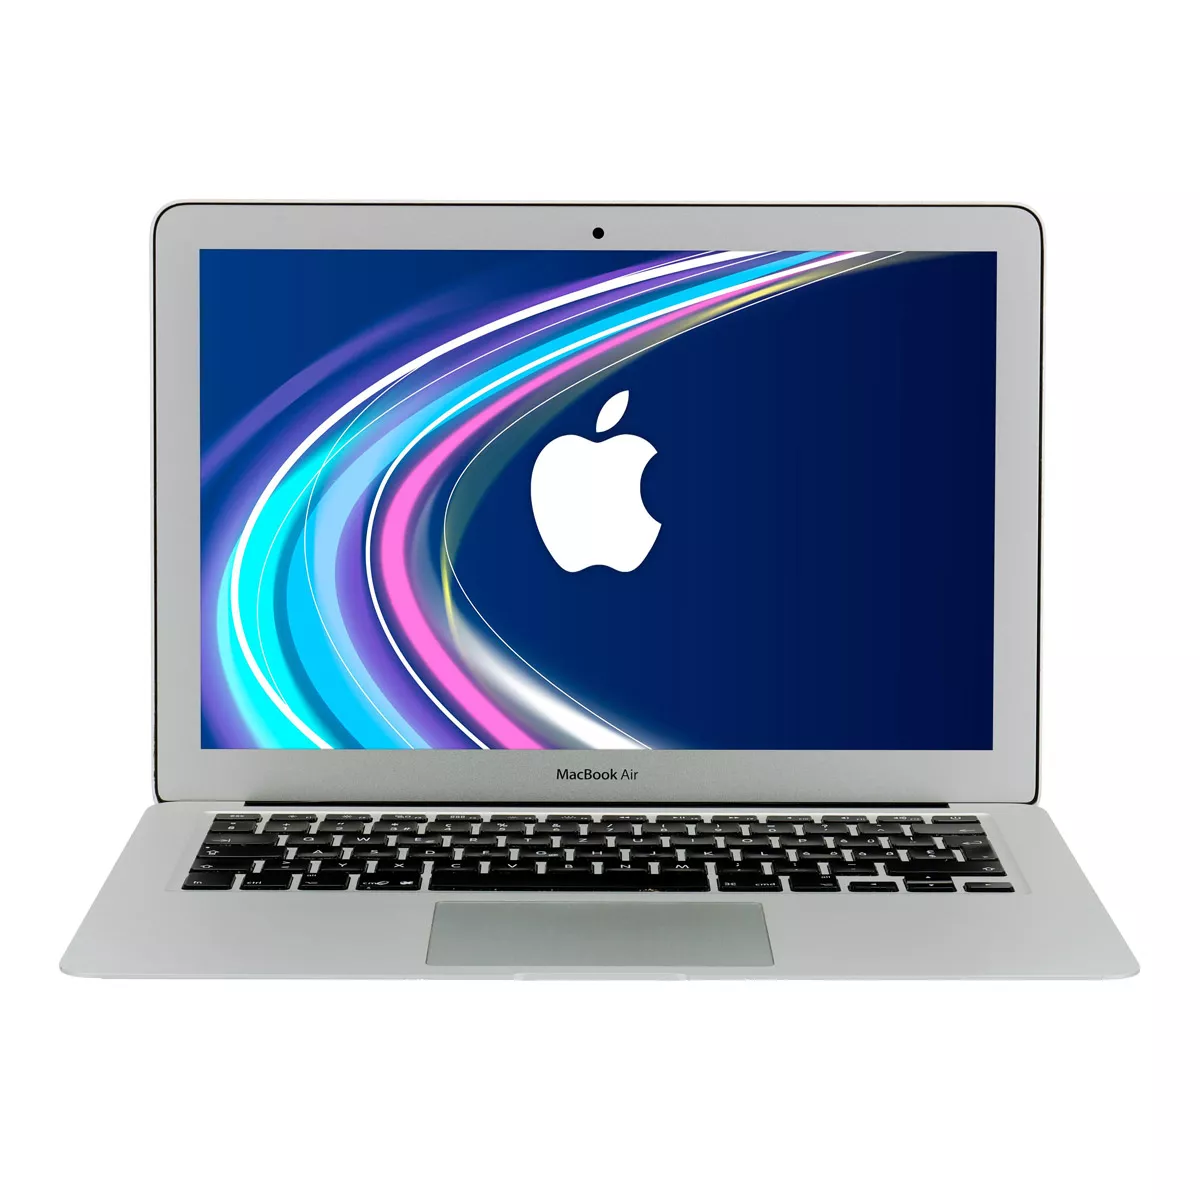 Apple MacBook Air 13" Mid 2013 Core i7 4650U 8 GB 250 GB SSD Webcam A+